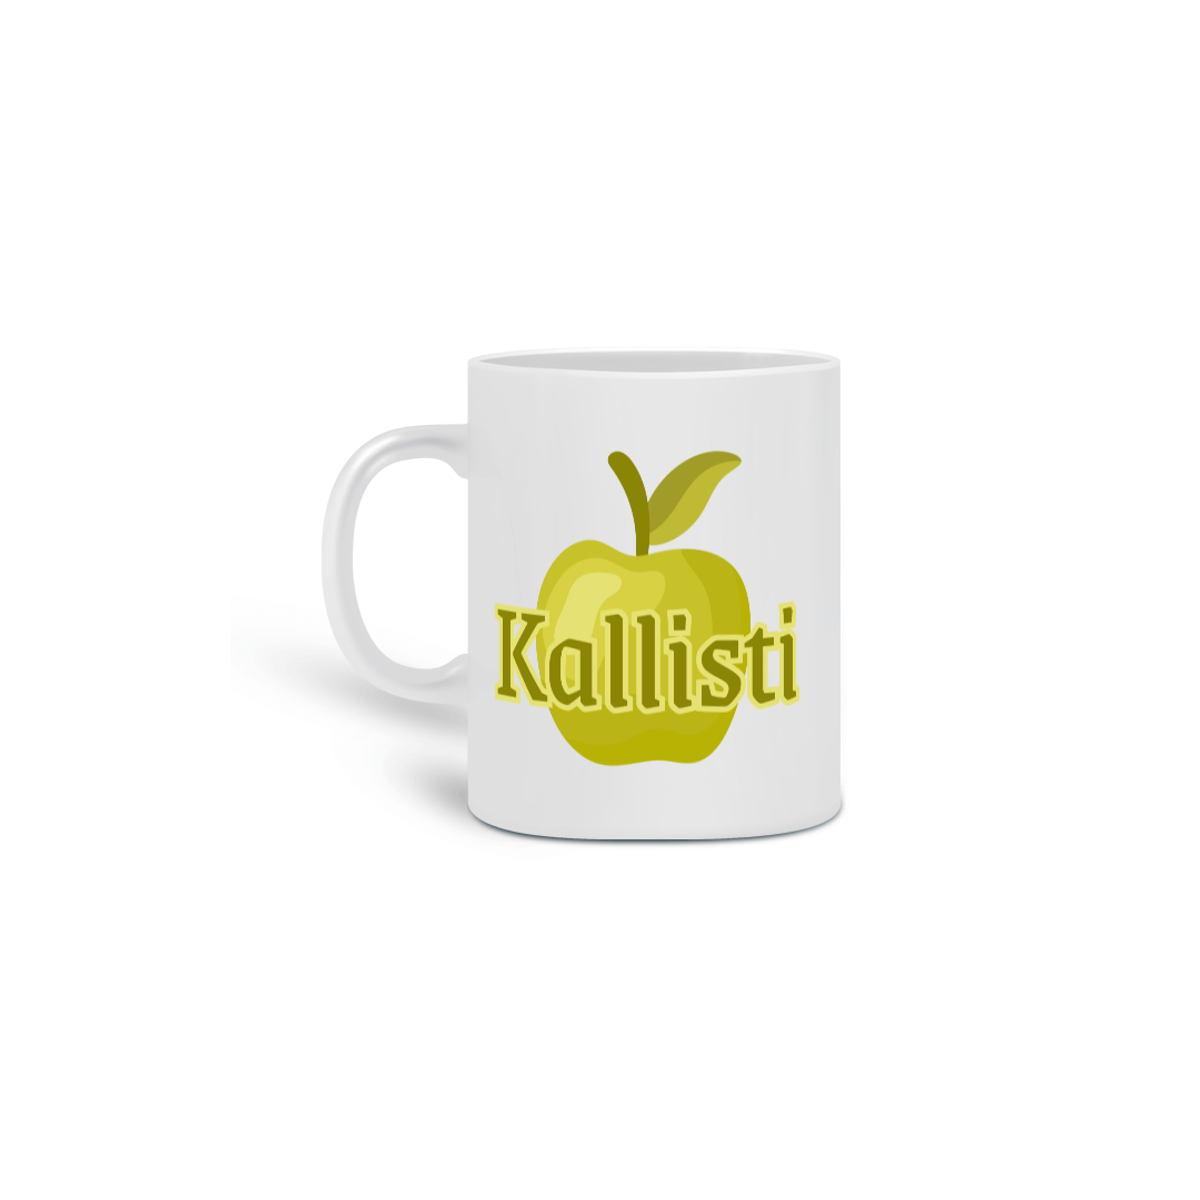 Nome do produto: Caneca Kallisti - Discordianismo